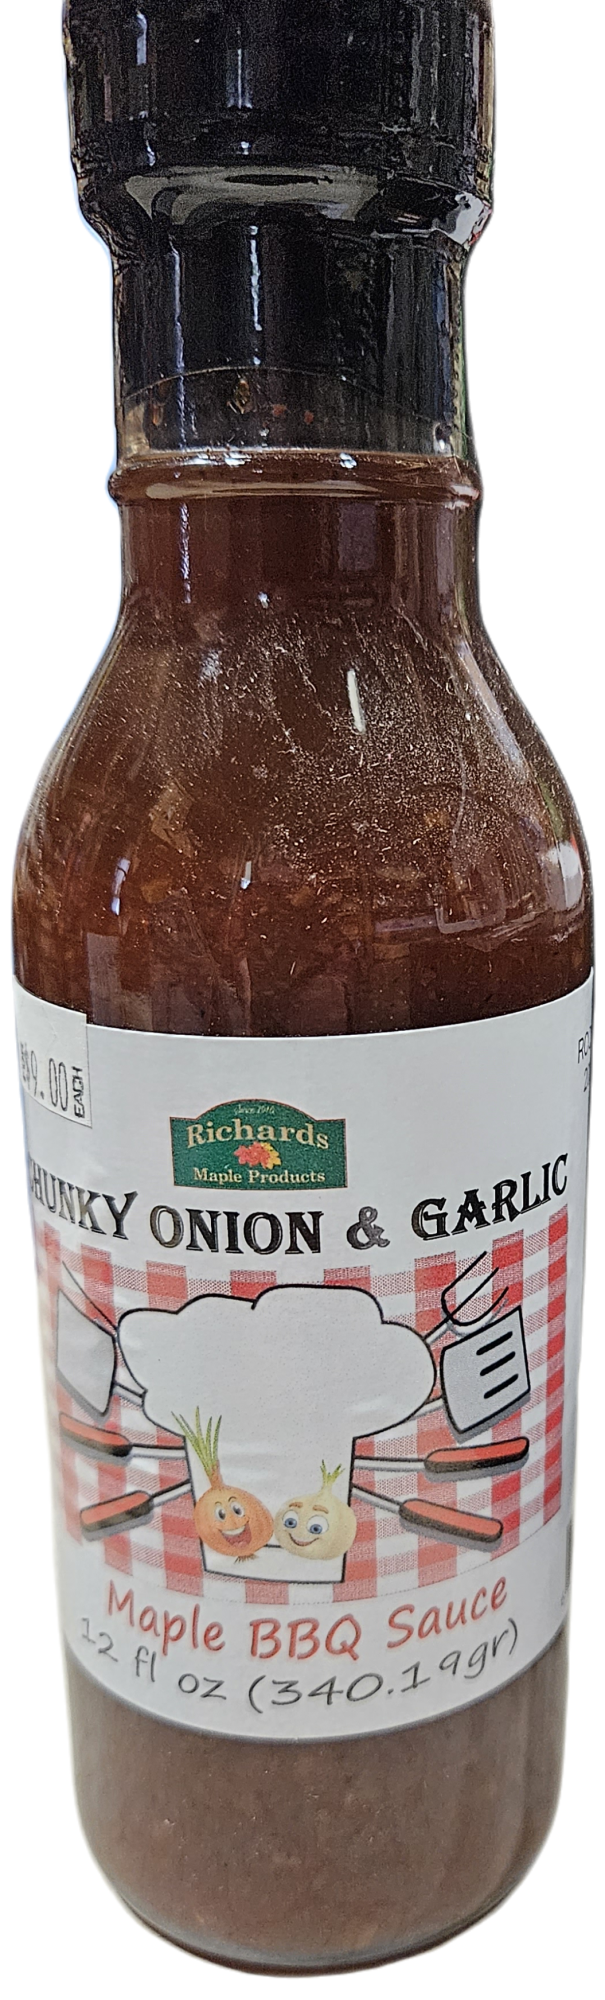 Maple Bar-B-Q Sauce Chunky Onion & Garlic